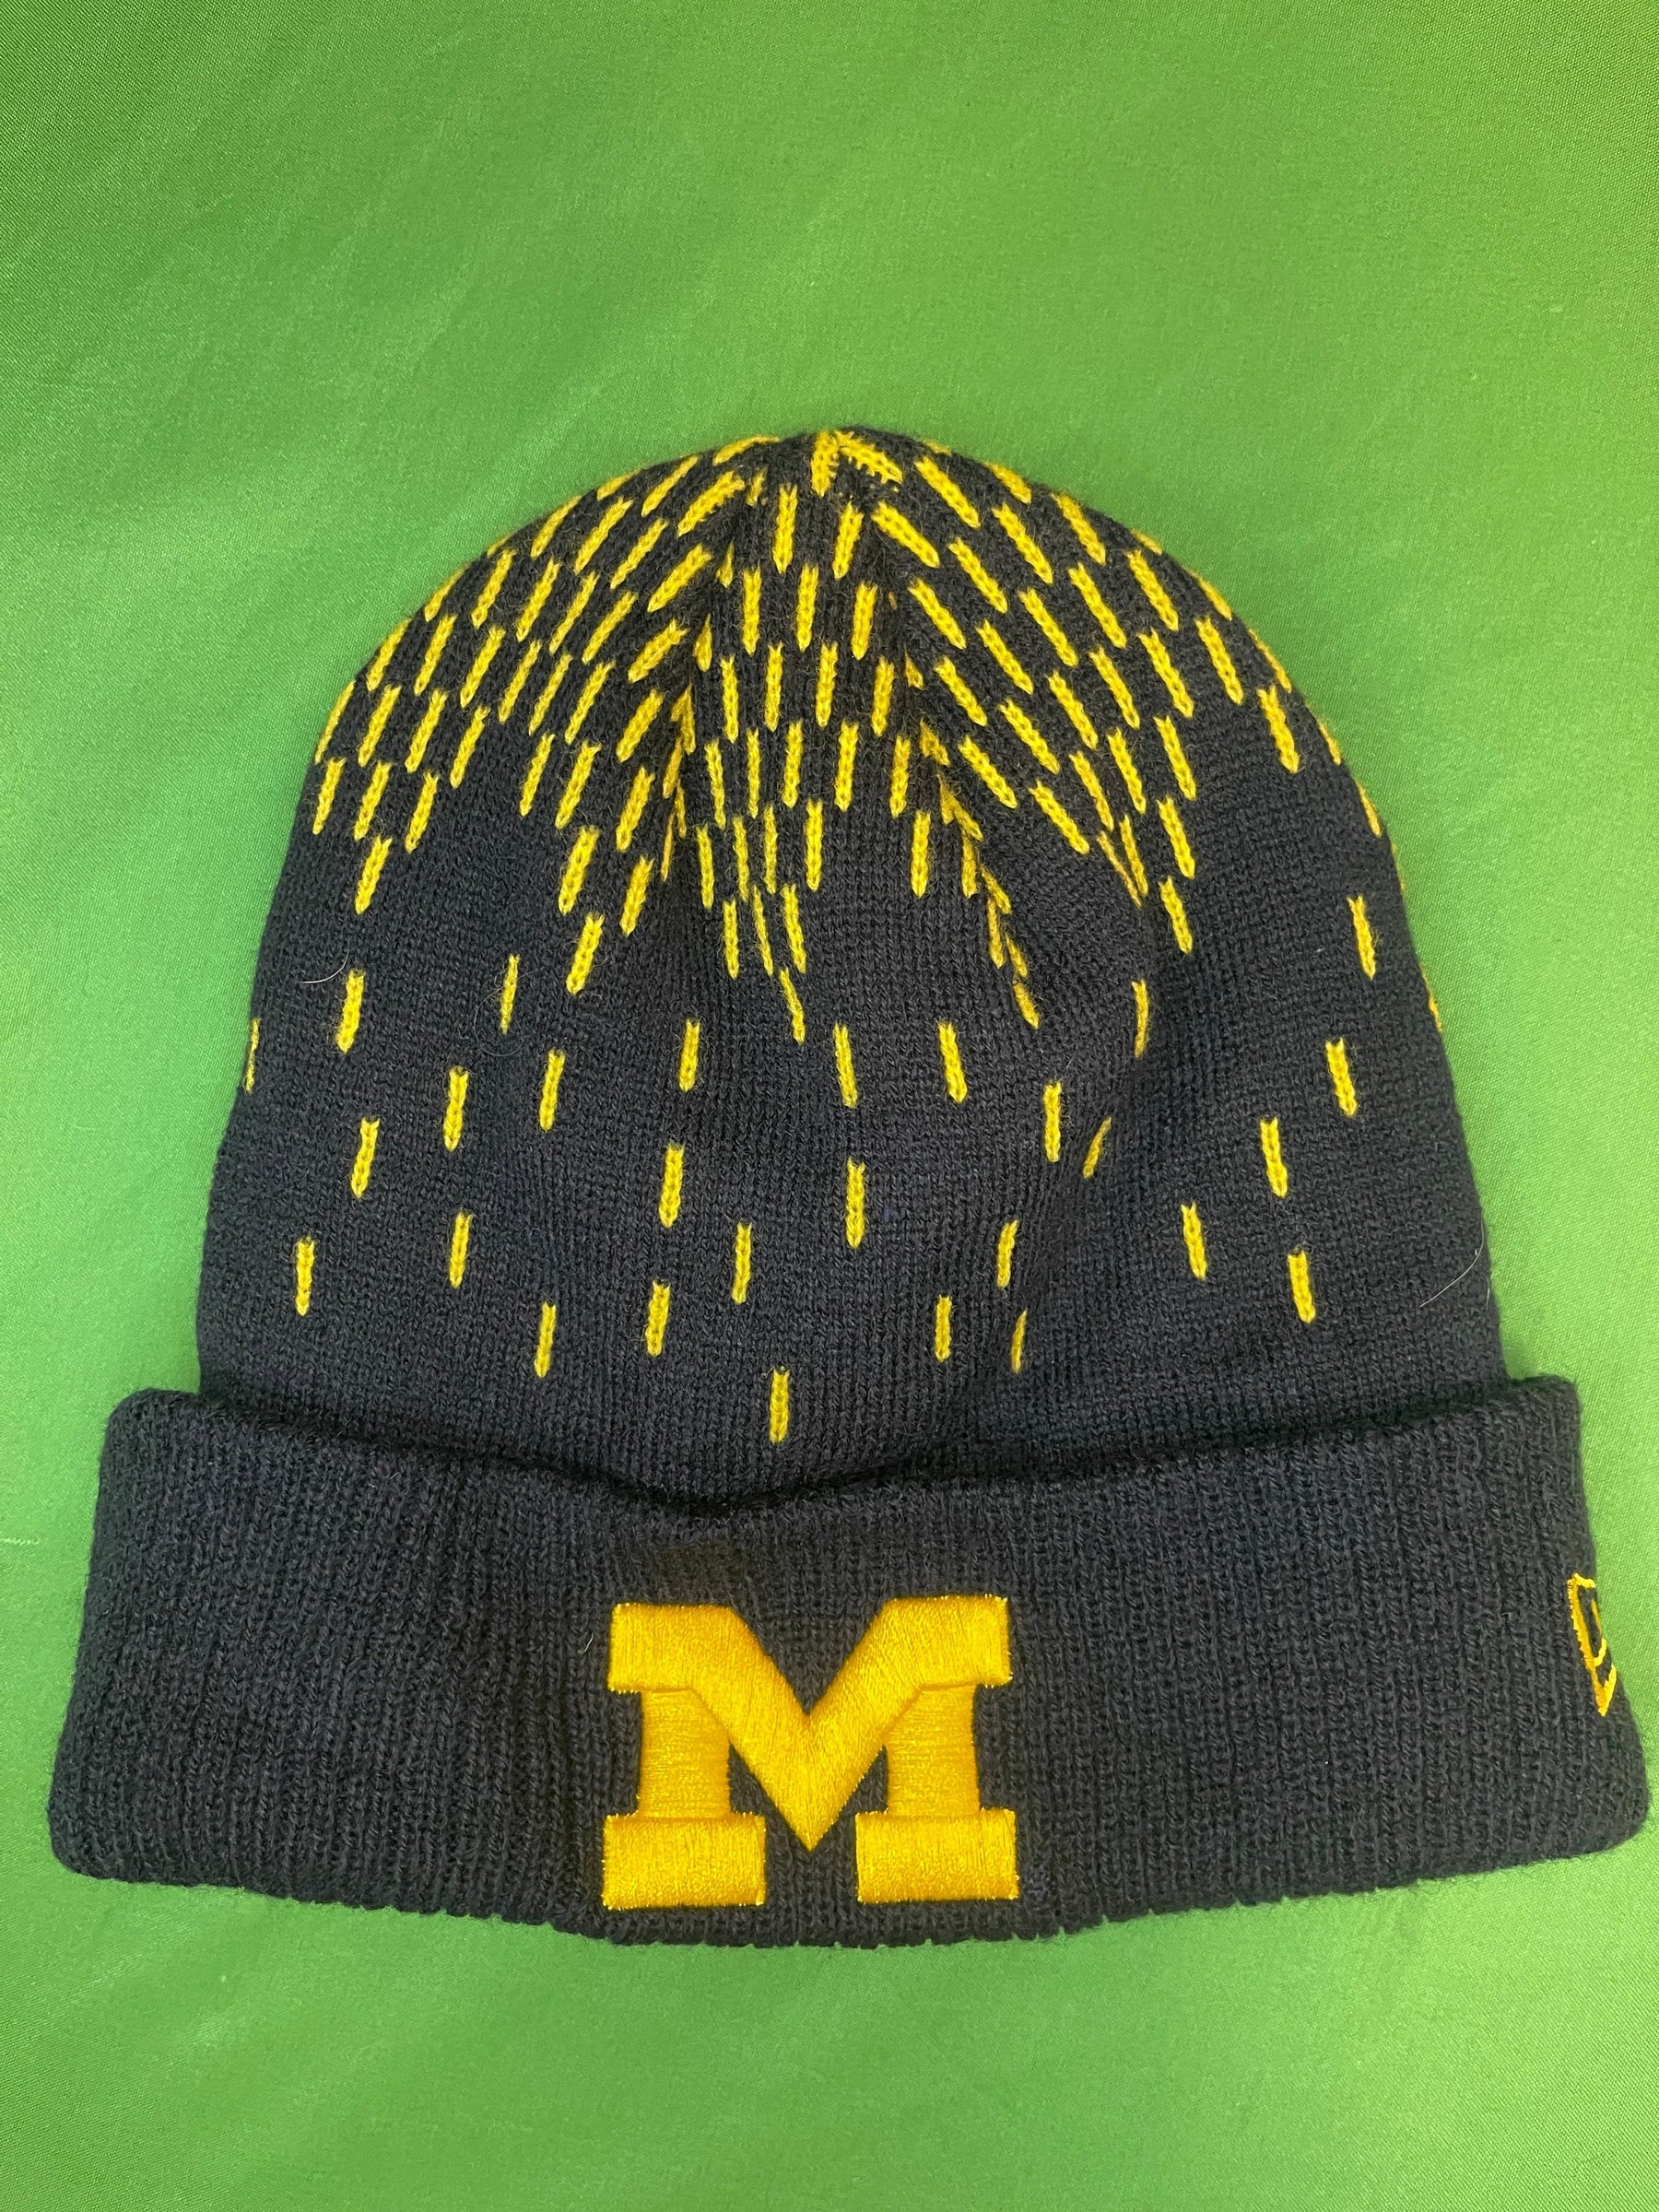 NCAA Michigan Wolverines New Era Thick Woolly Hat Beanie OSFM